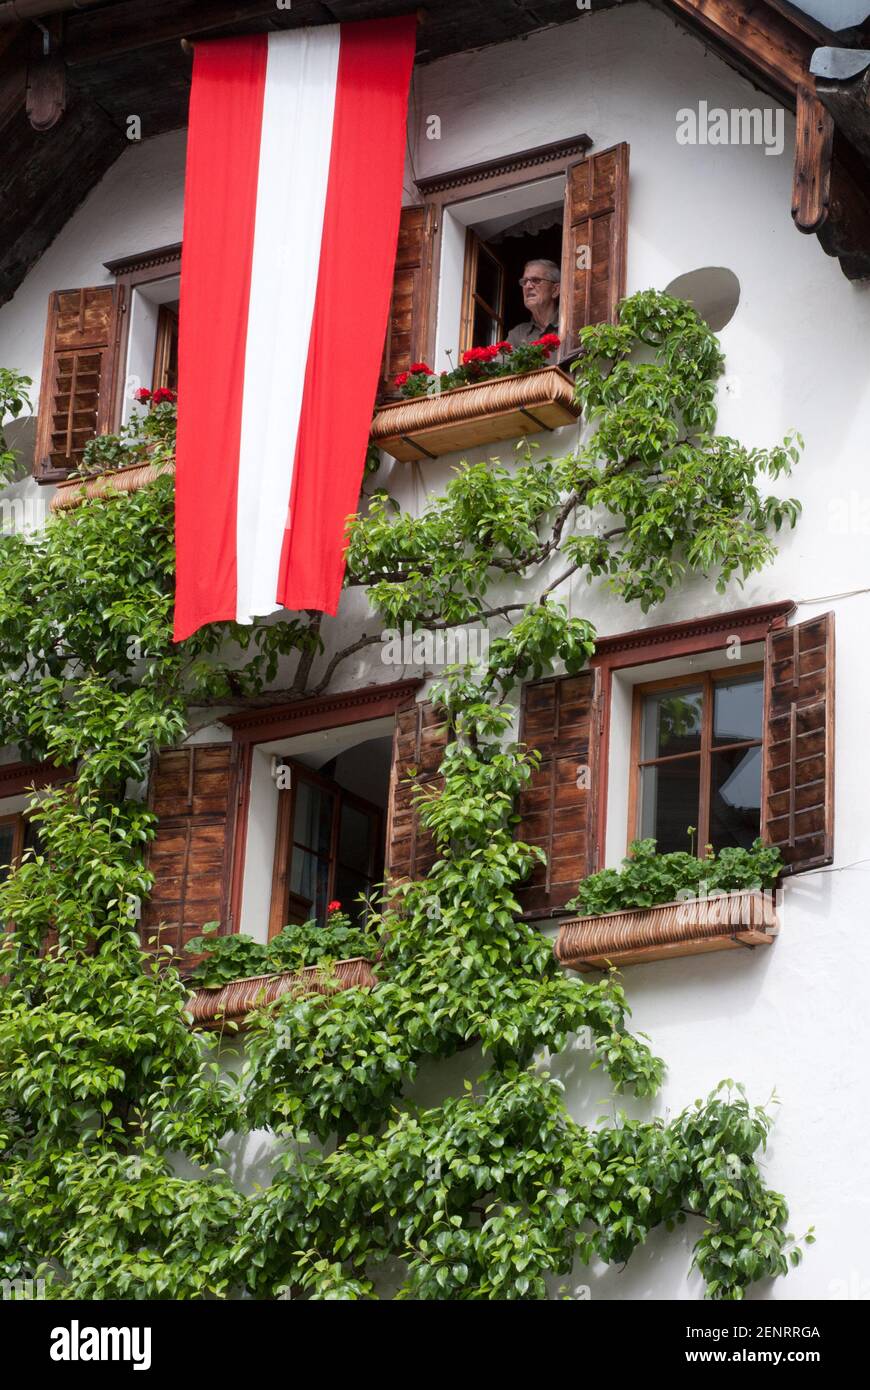 old house on Hallstatt market place with brown shutters, open windows, espalier tree and Austrian flag, Hallstatt, Austria Stock Photo